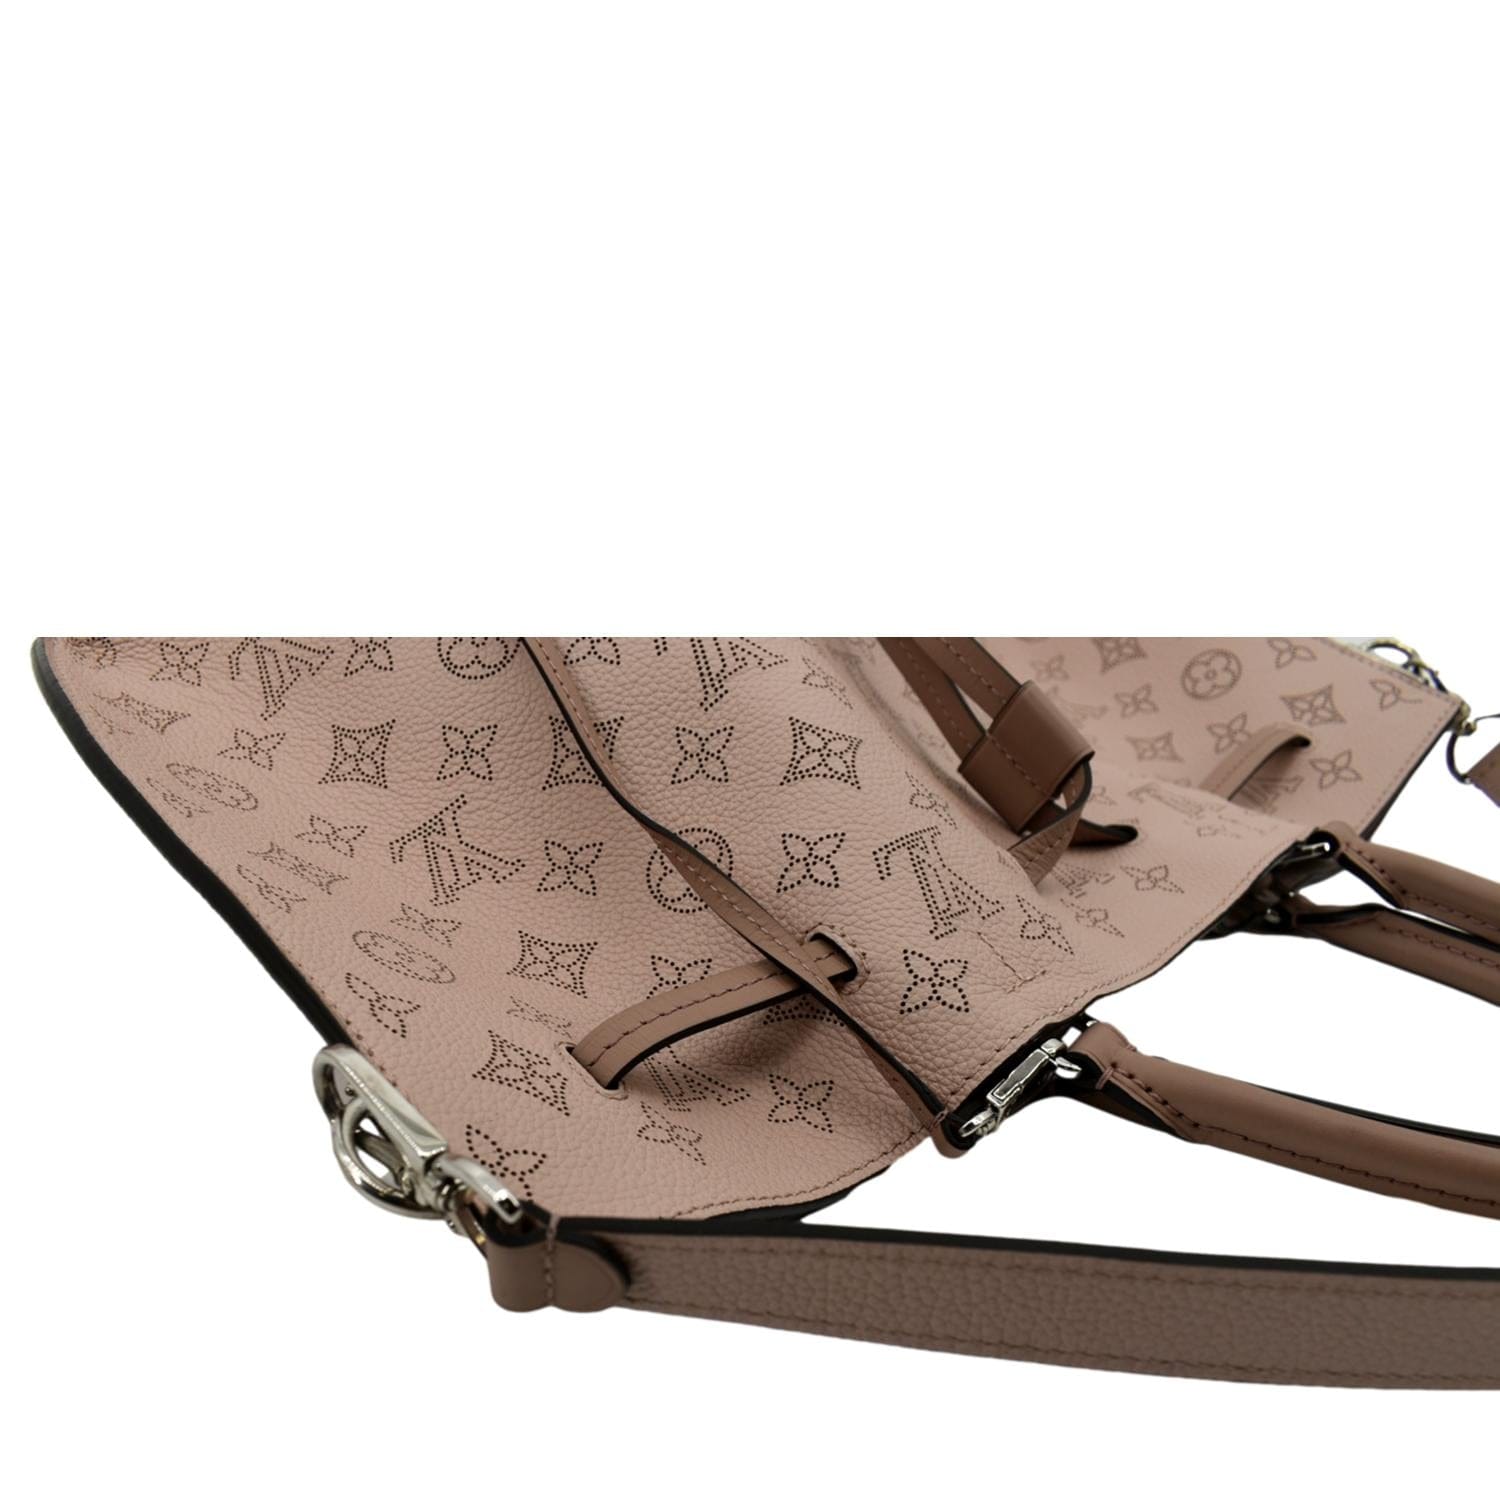 Girolata leather satchel